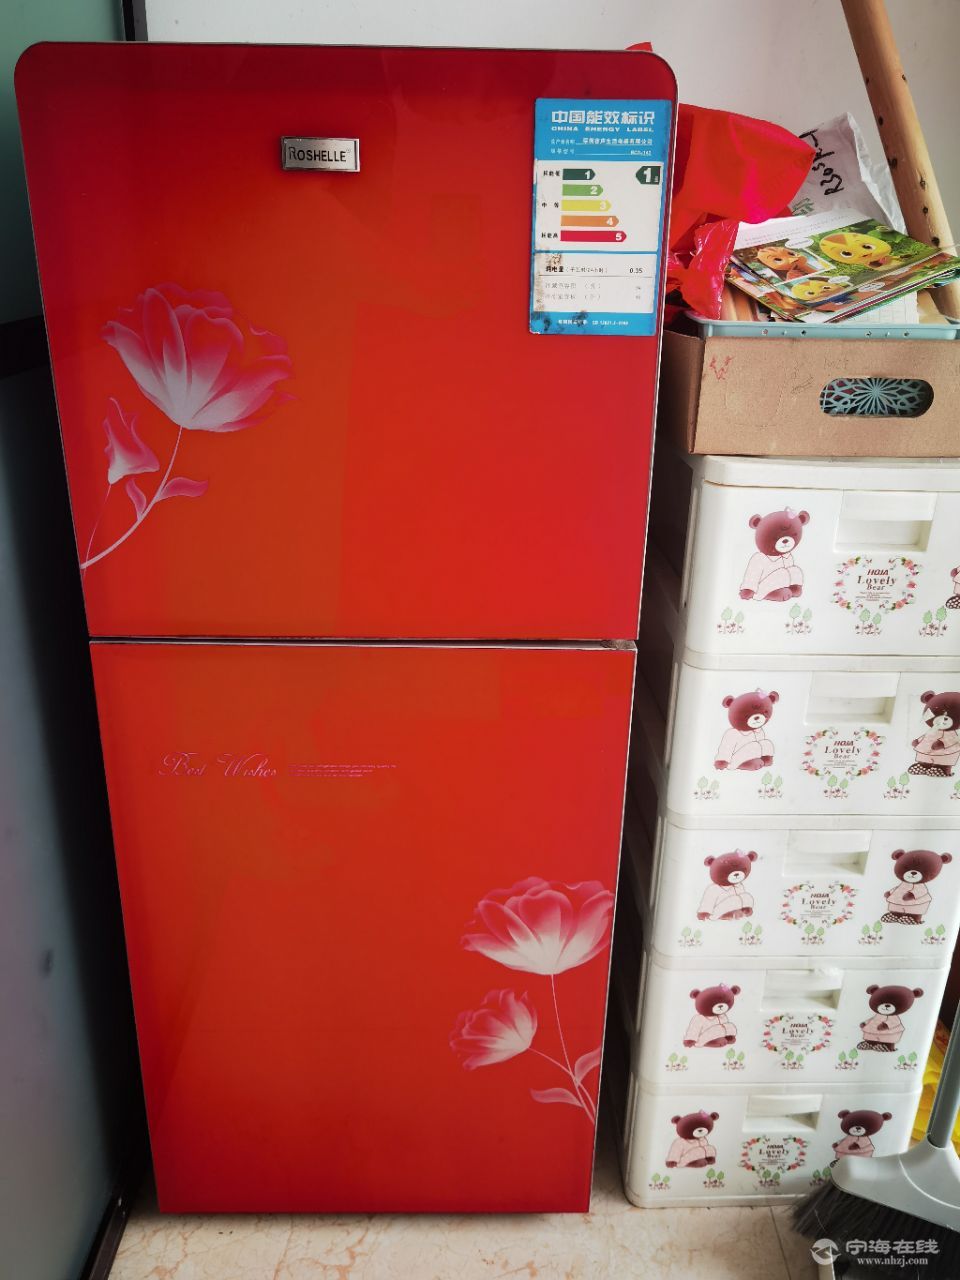 roshelle冰箱不制冷图片